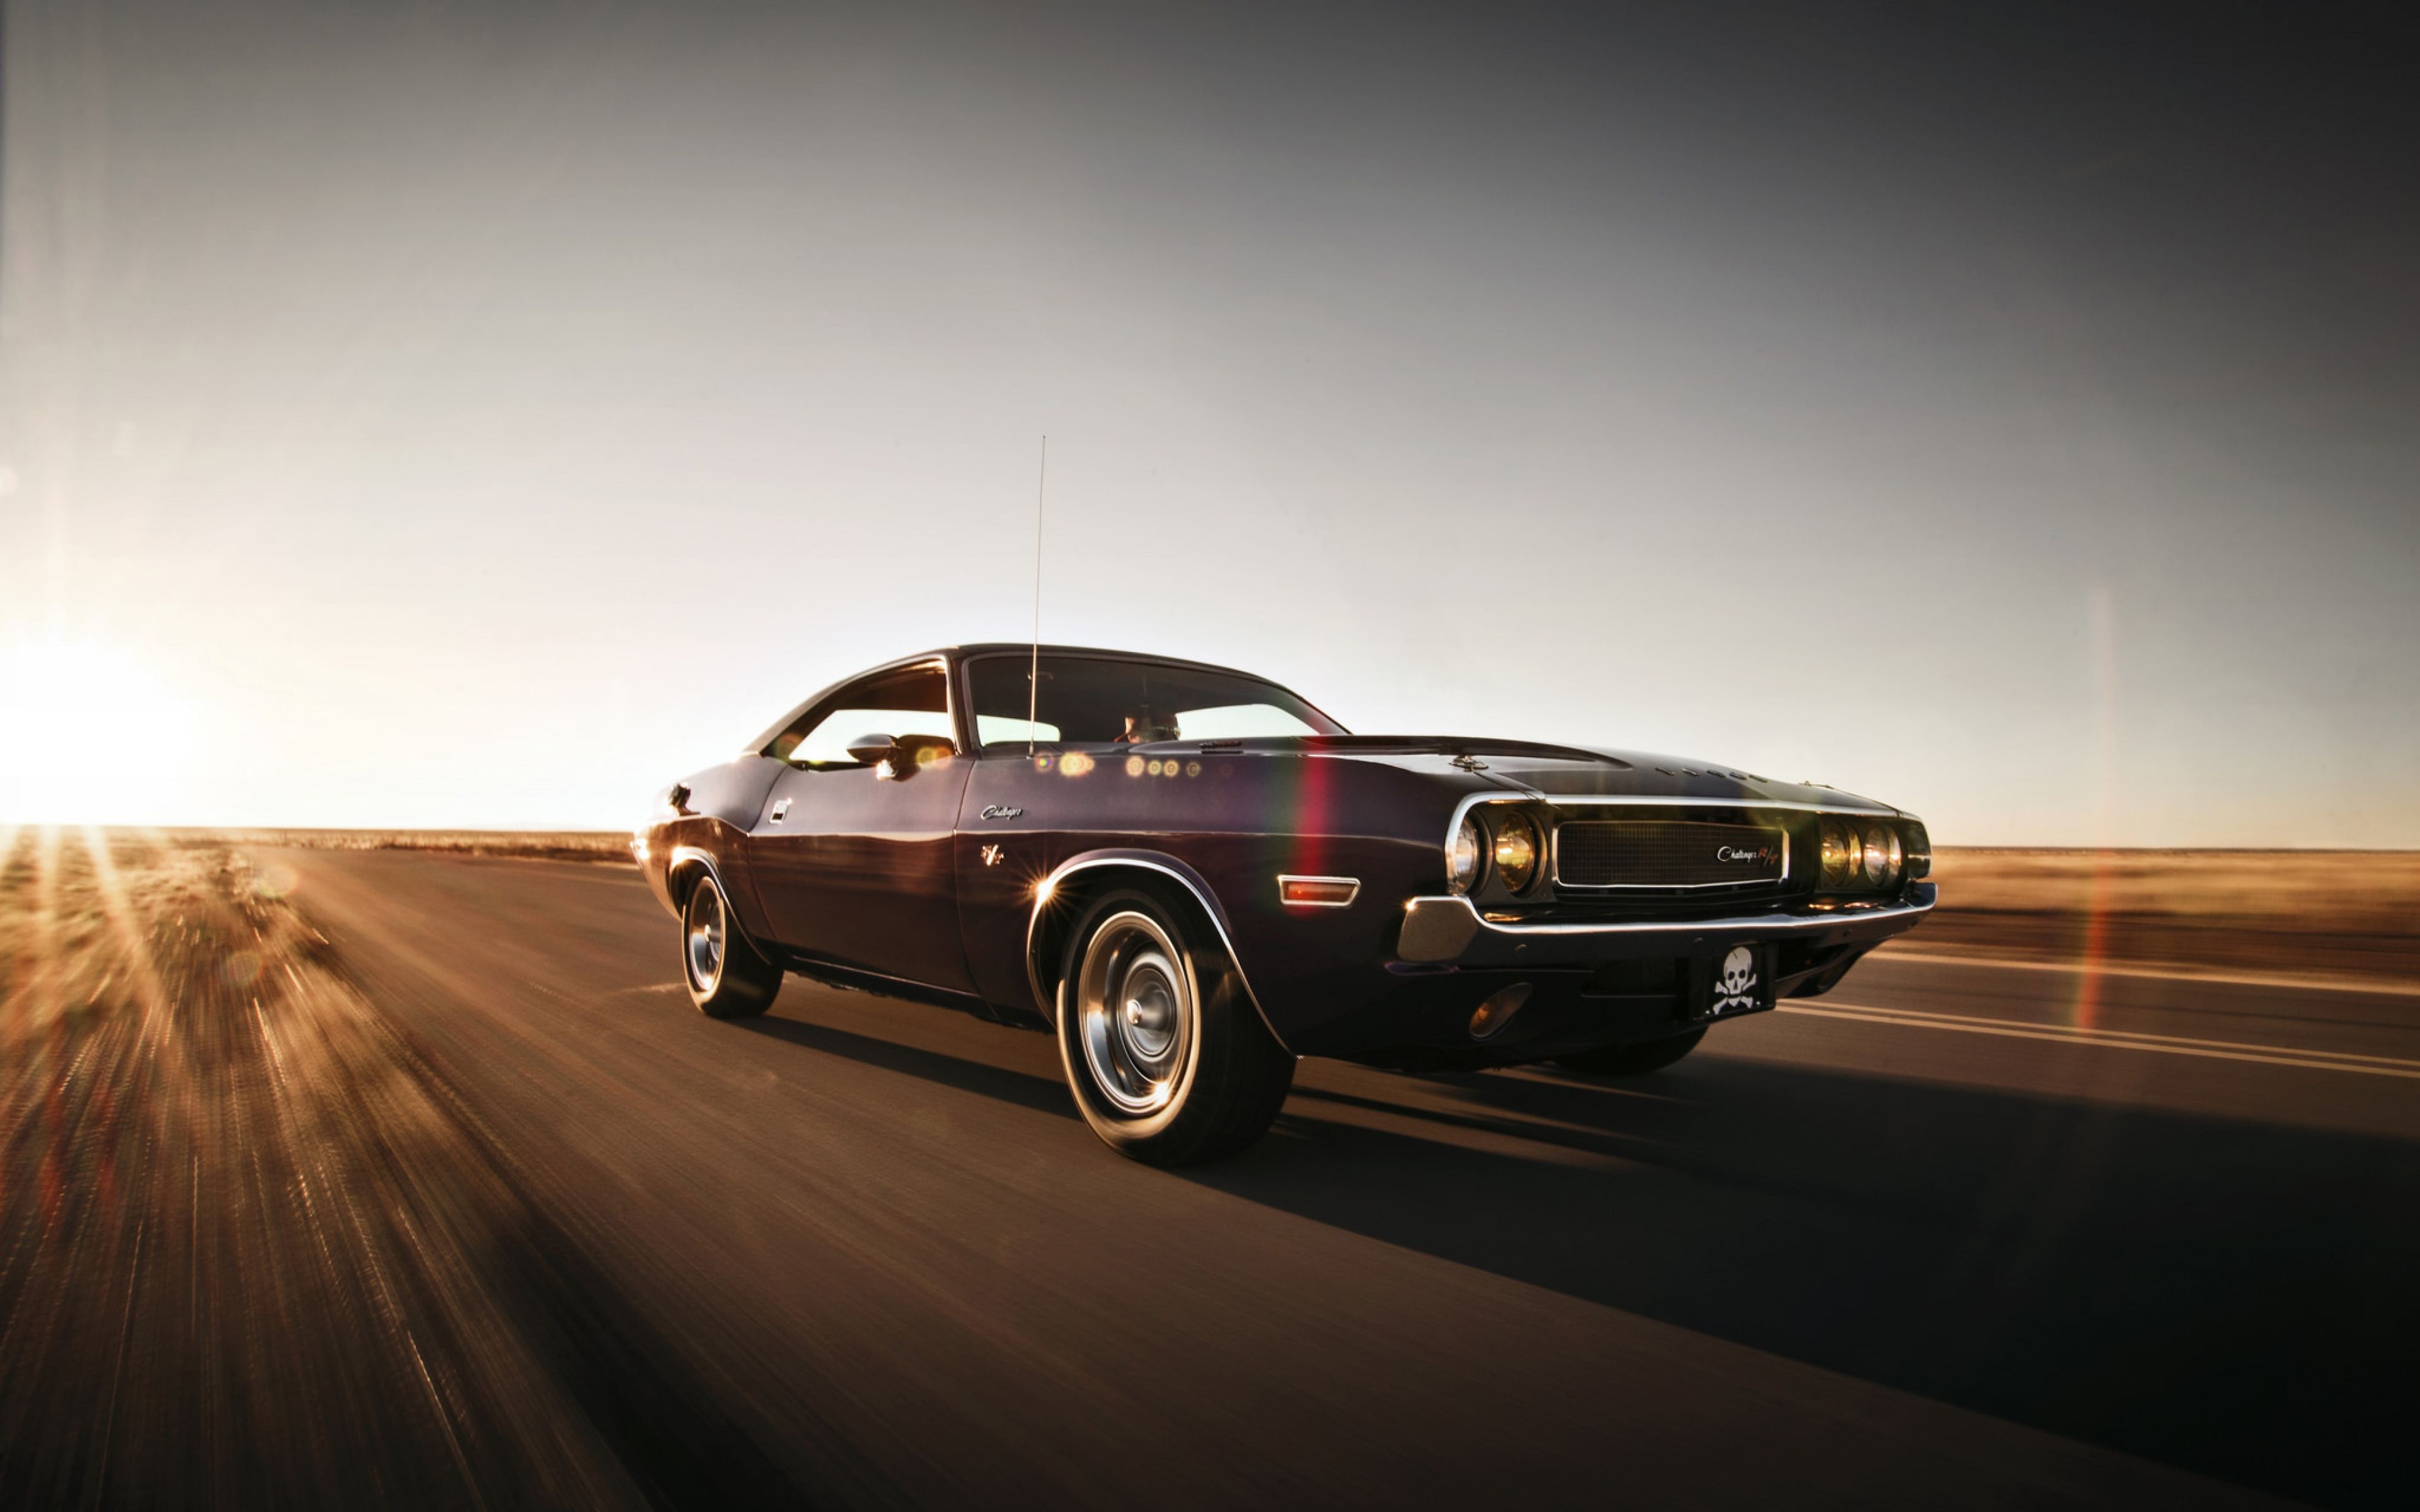 Free download Dodge Challenger In Desert Speed Car HD Wallpaper